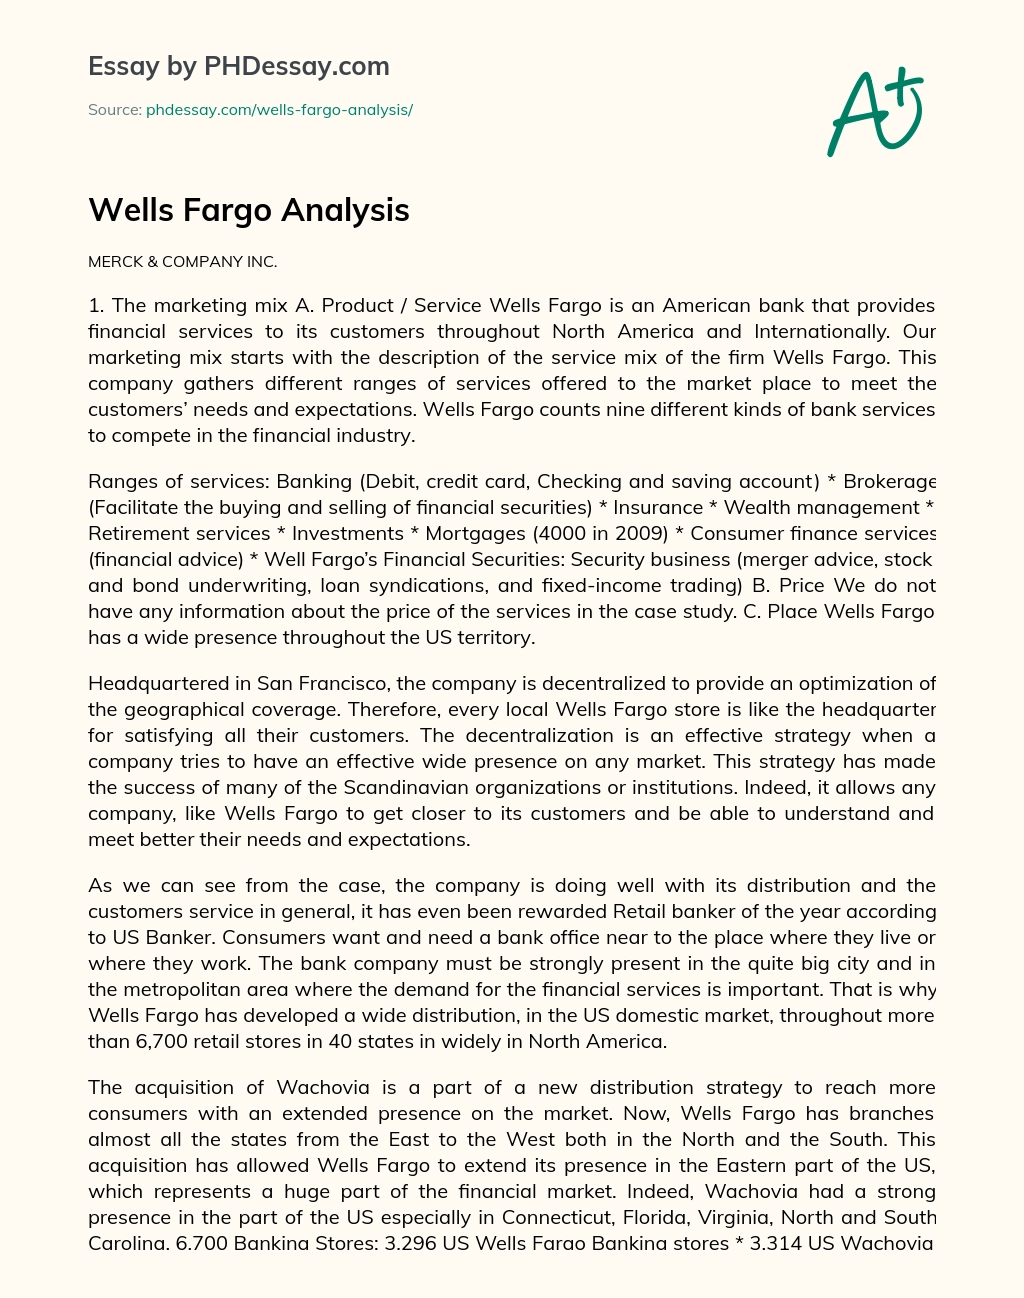 Wells Fargo Analysis essay